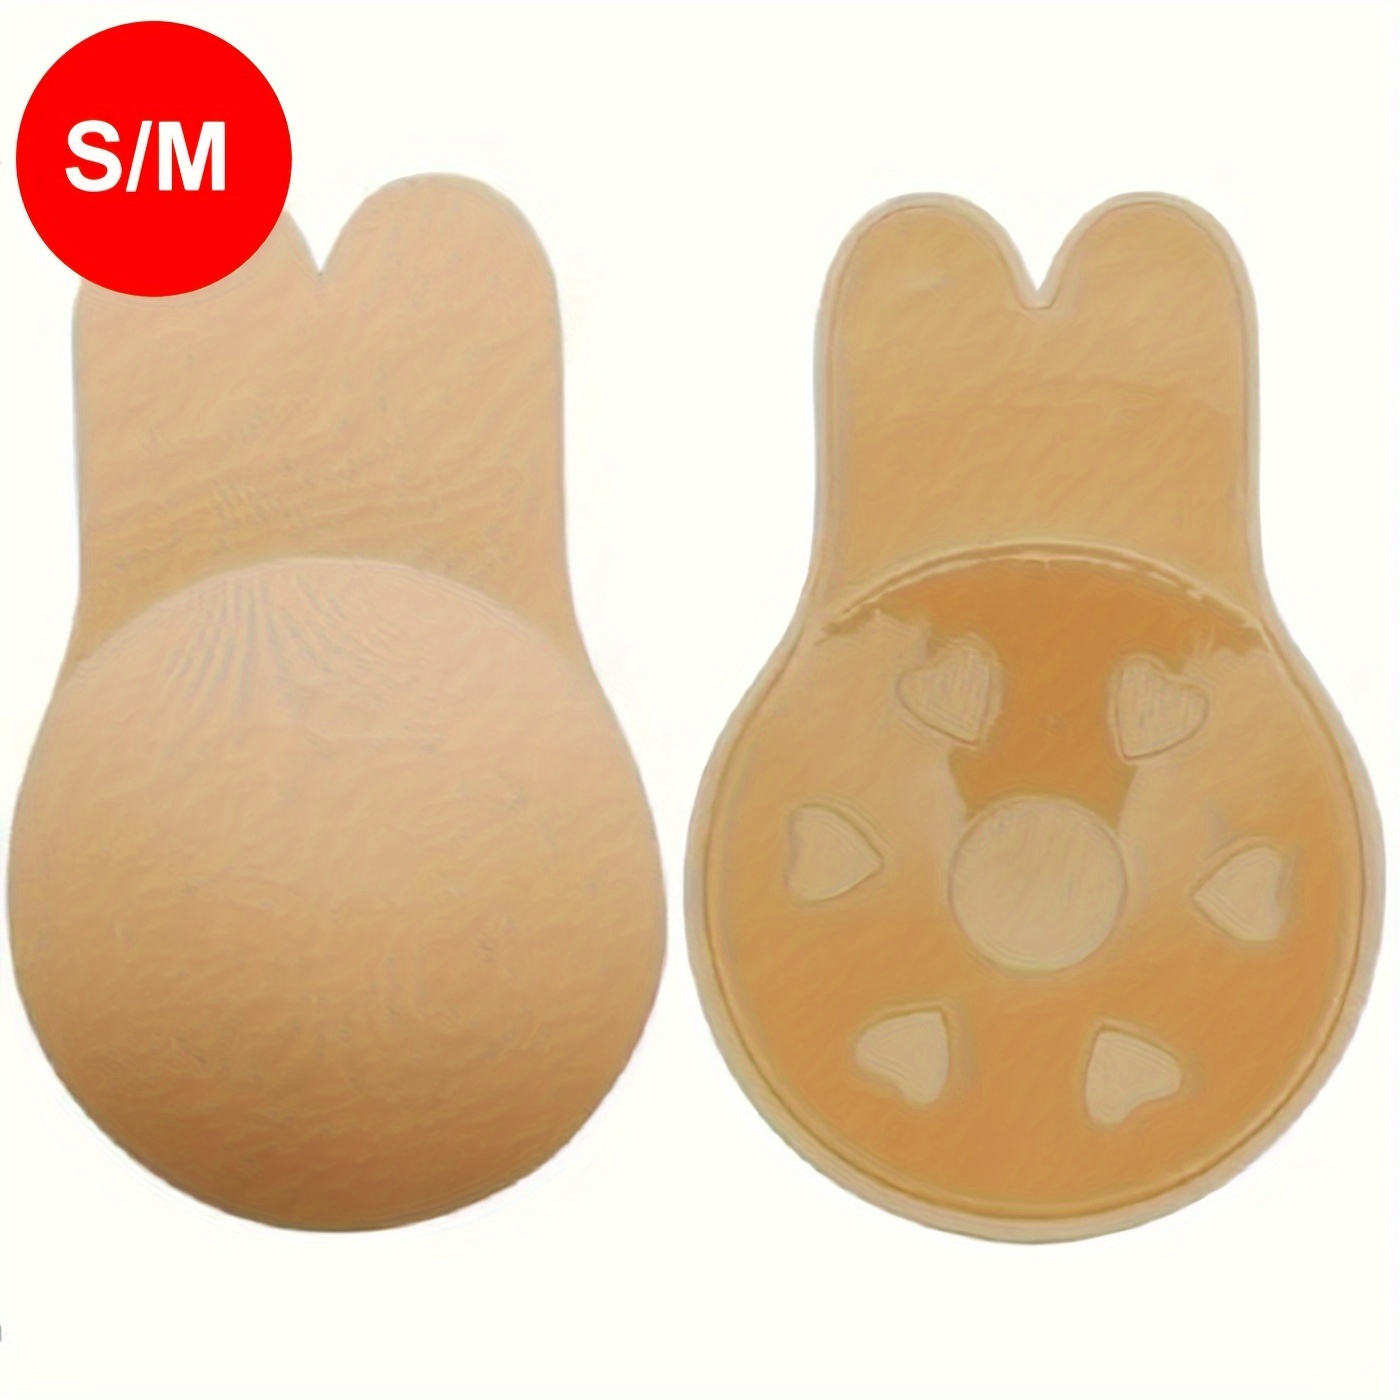 Frauen Push Up Bhs Self Adhesive Silikon Liebsten Unsichtbare Bh Reusable  Sticky Brust Lift Band Kaninchen Nippel Abdeckung Bh Pads